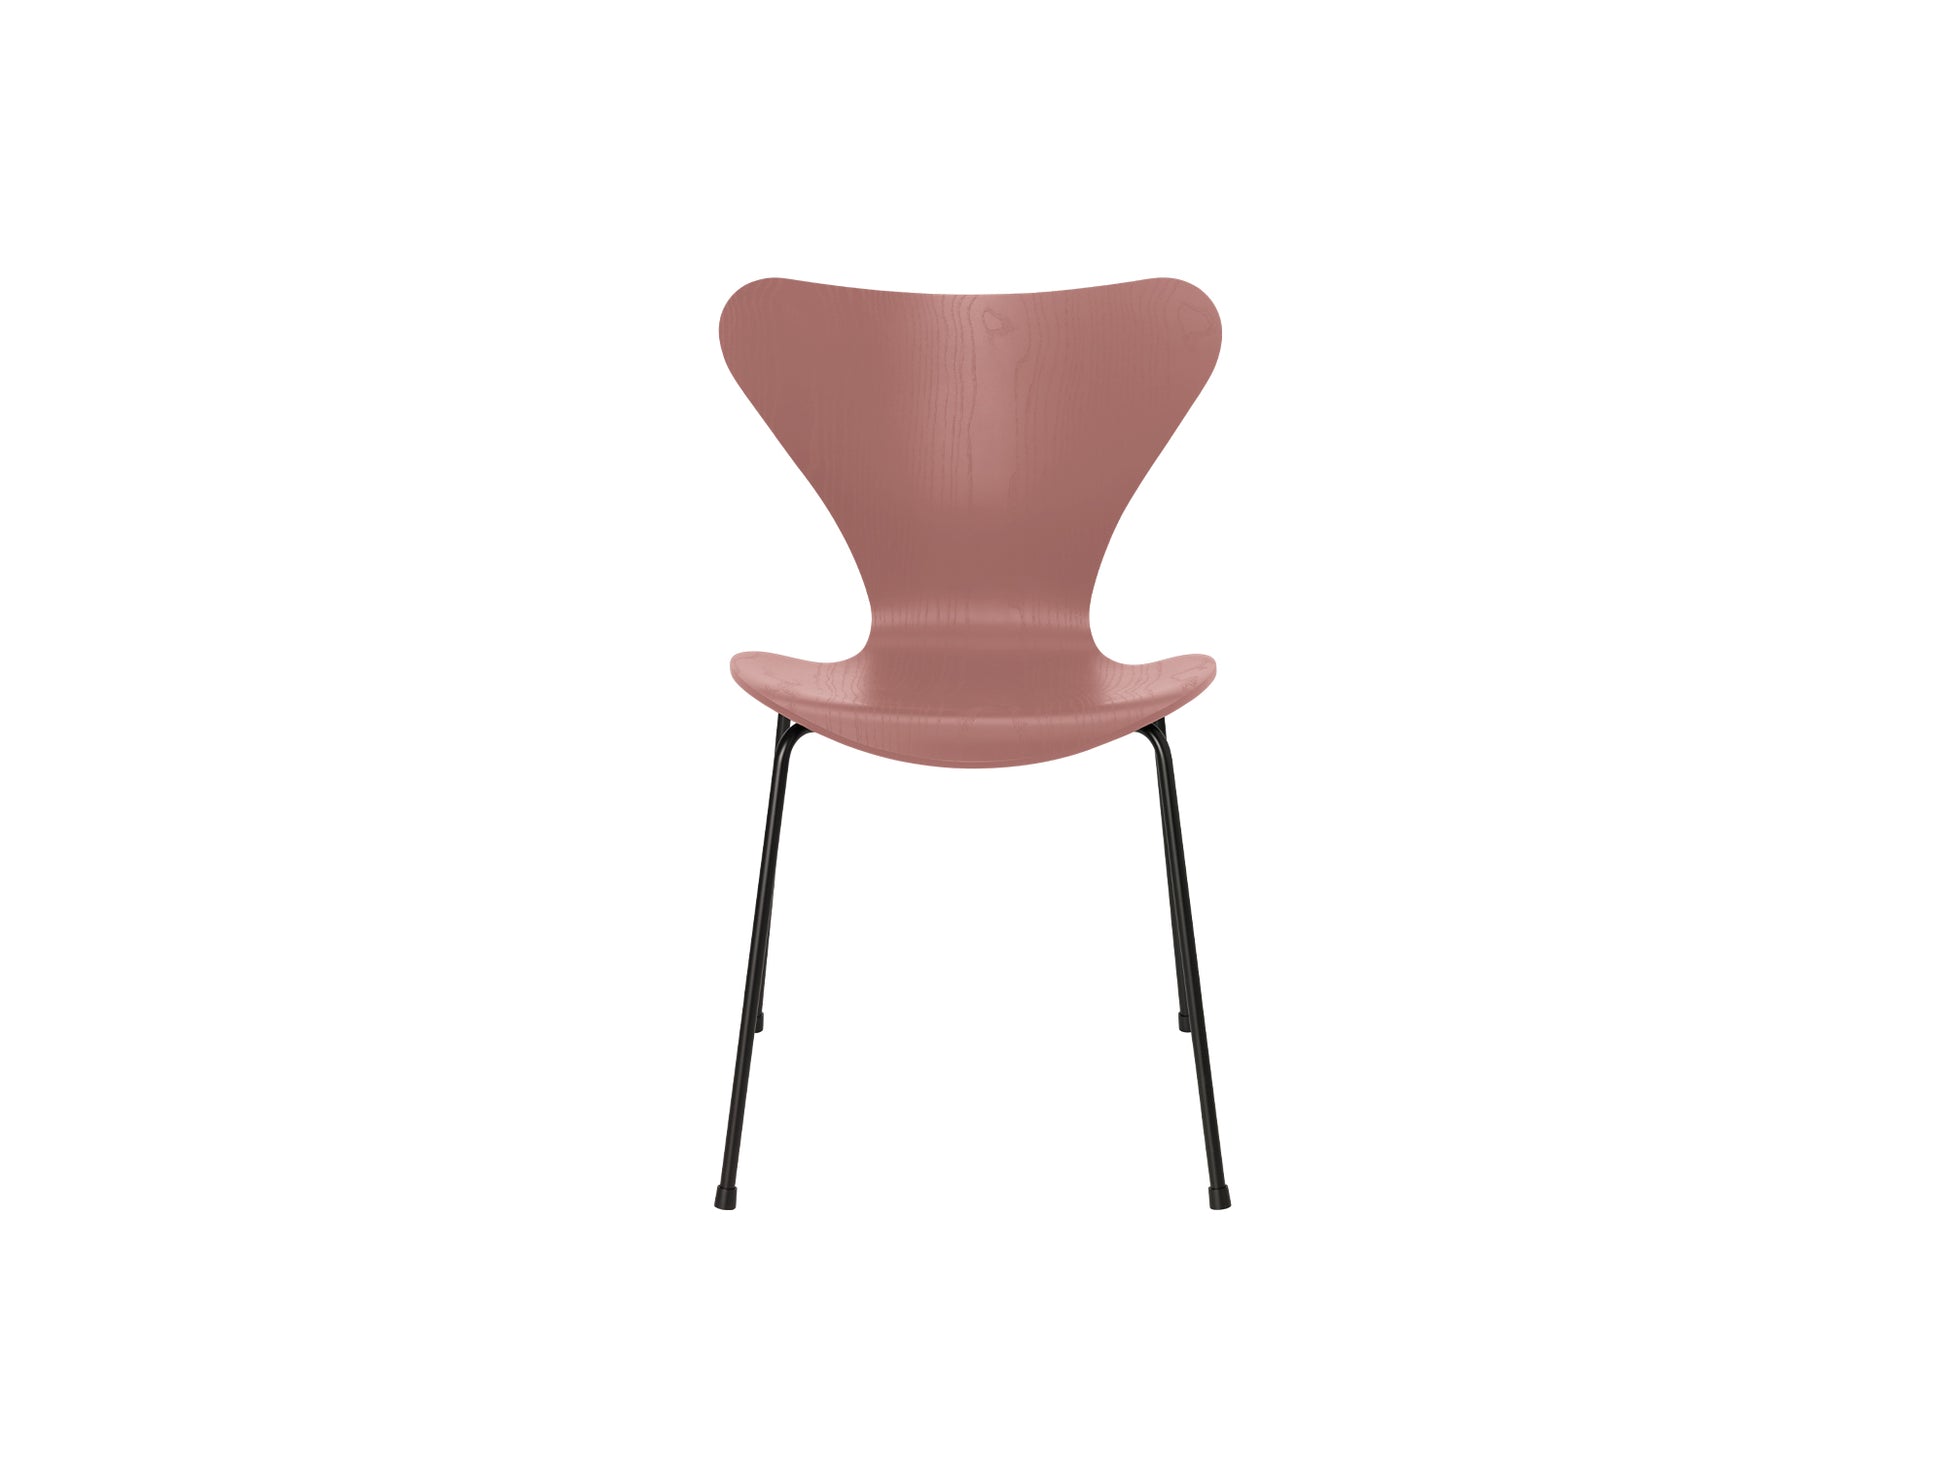 Series 7™ 3107 Dining Chair by Fritz Hansen - Wild Rose Coloured Ash Veneer Shell / Black Steel